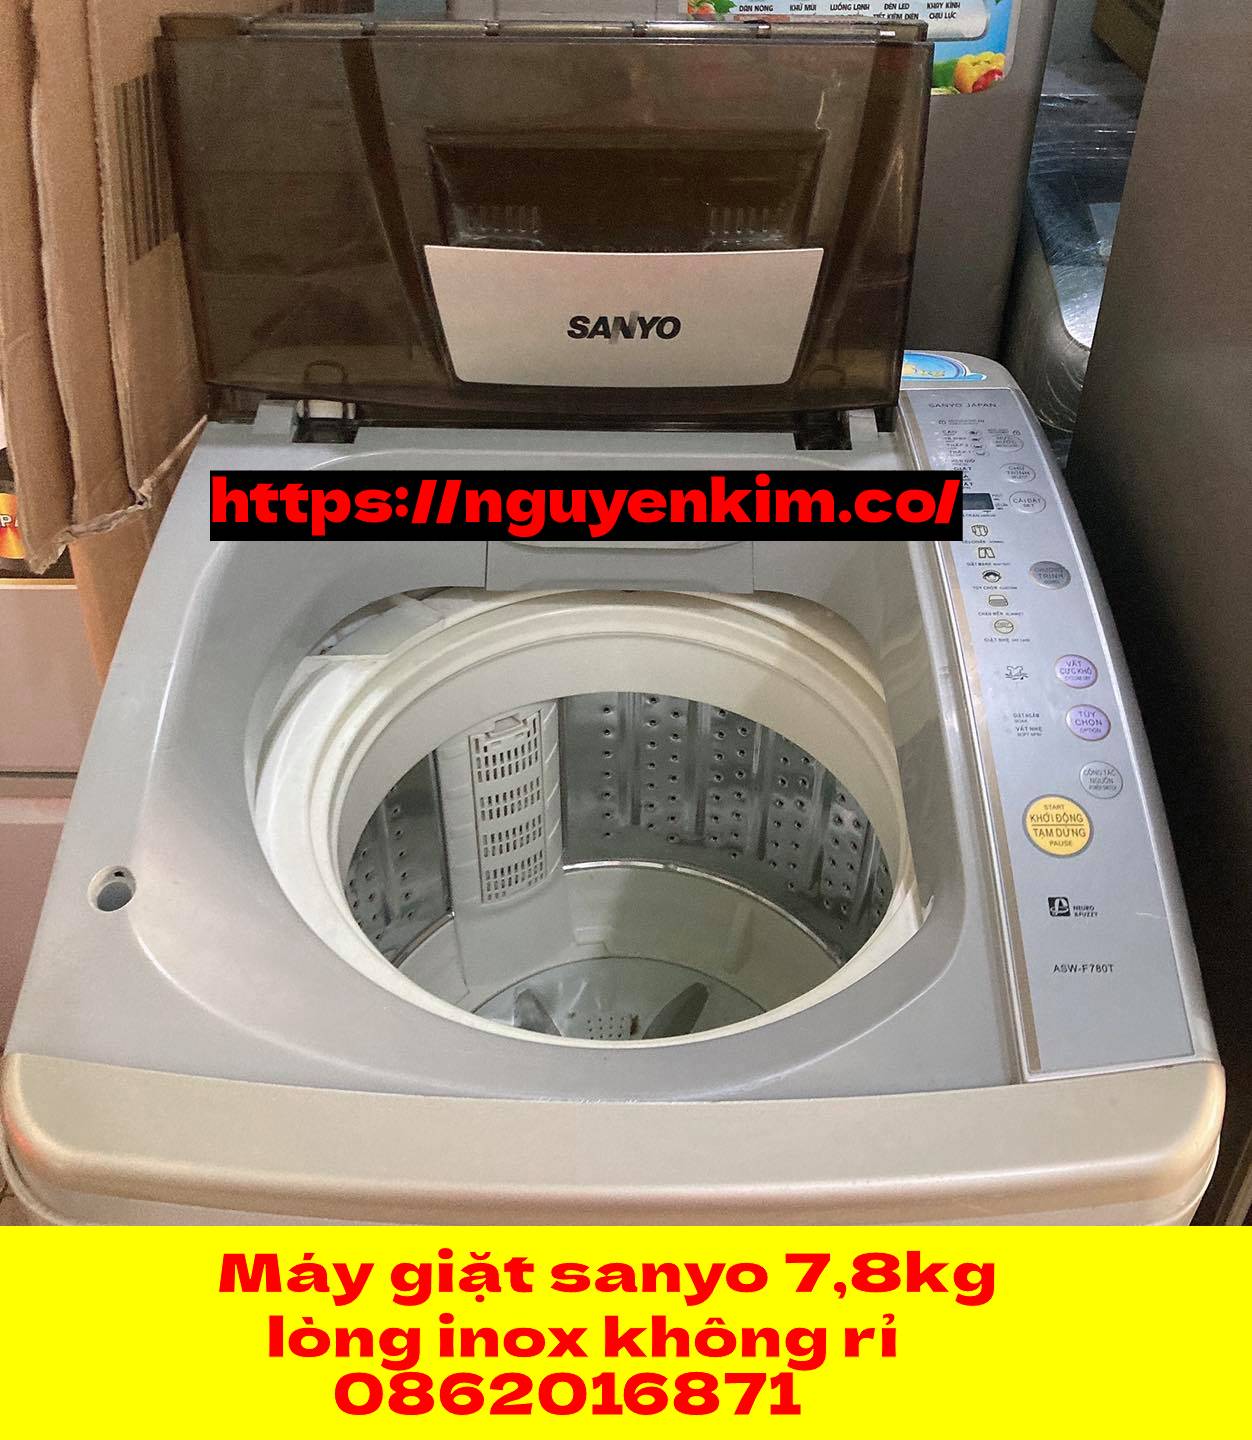 Máy Giặt Cũ Sanyo Giá Rẻ